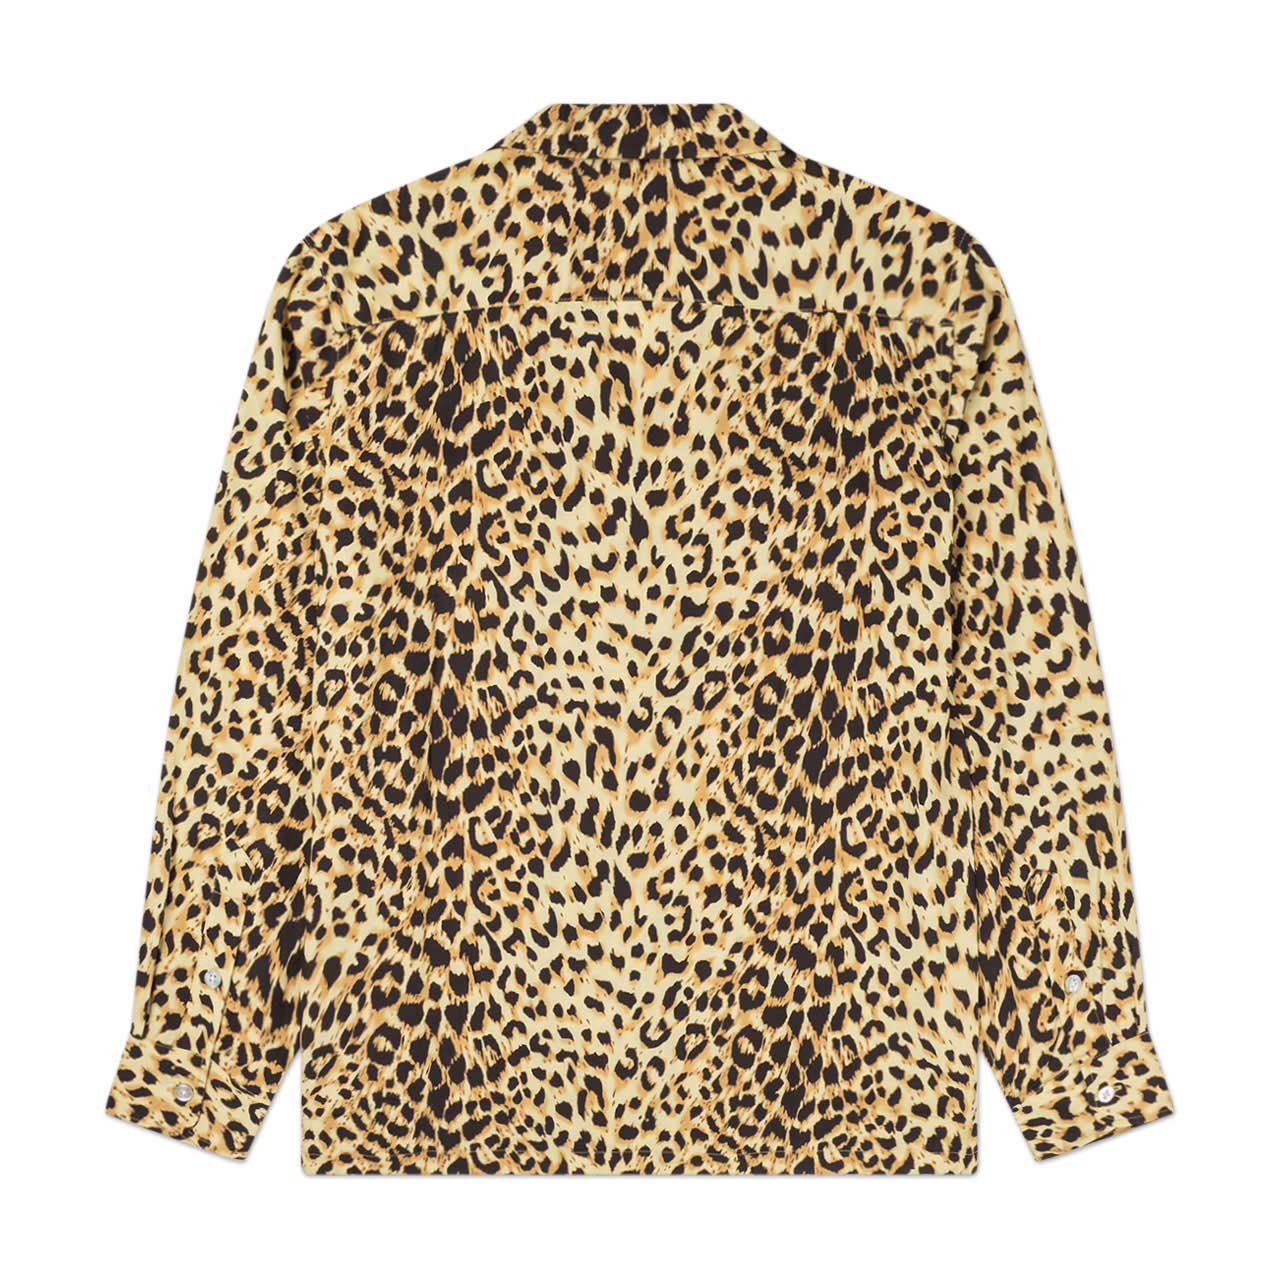 carhartt wip x wacko maria leopard shirt (leopard print) - i028239.0e1.00.03 - a.plus - Image - 2